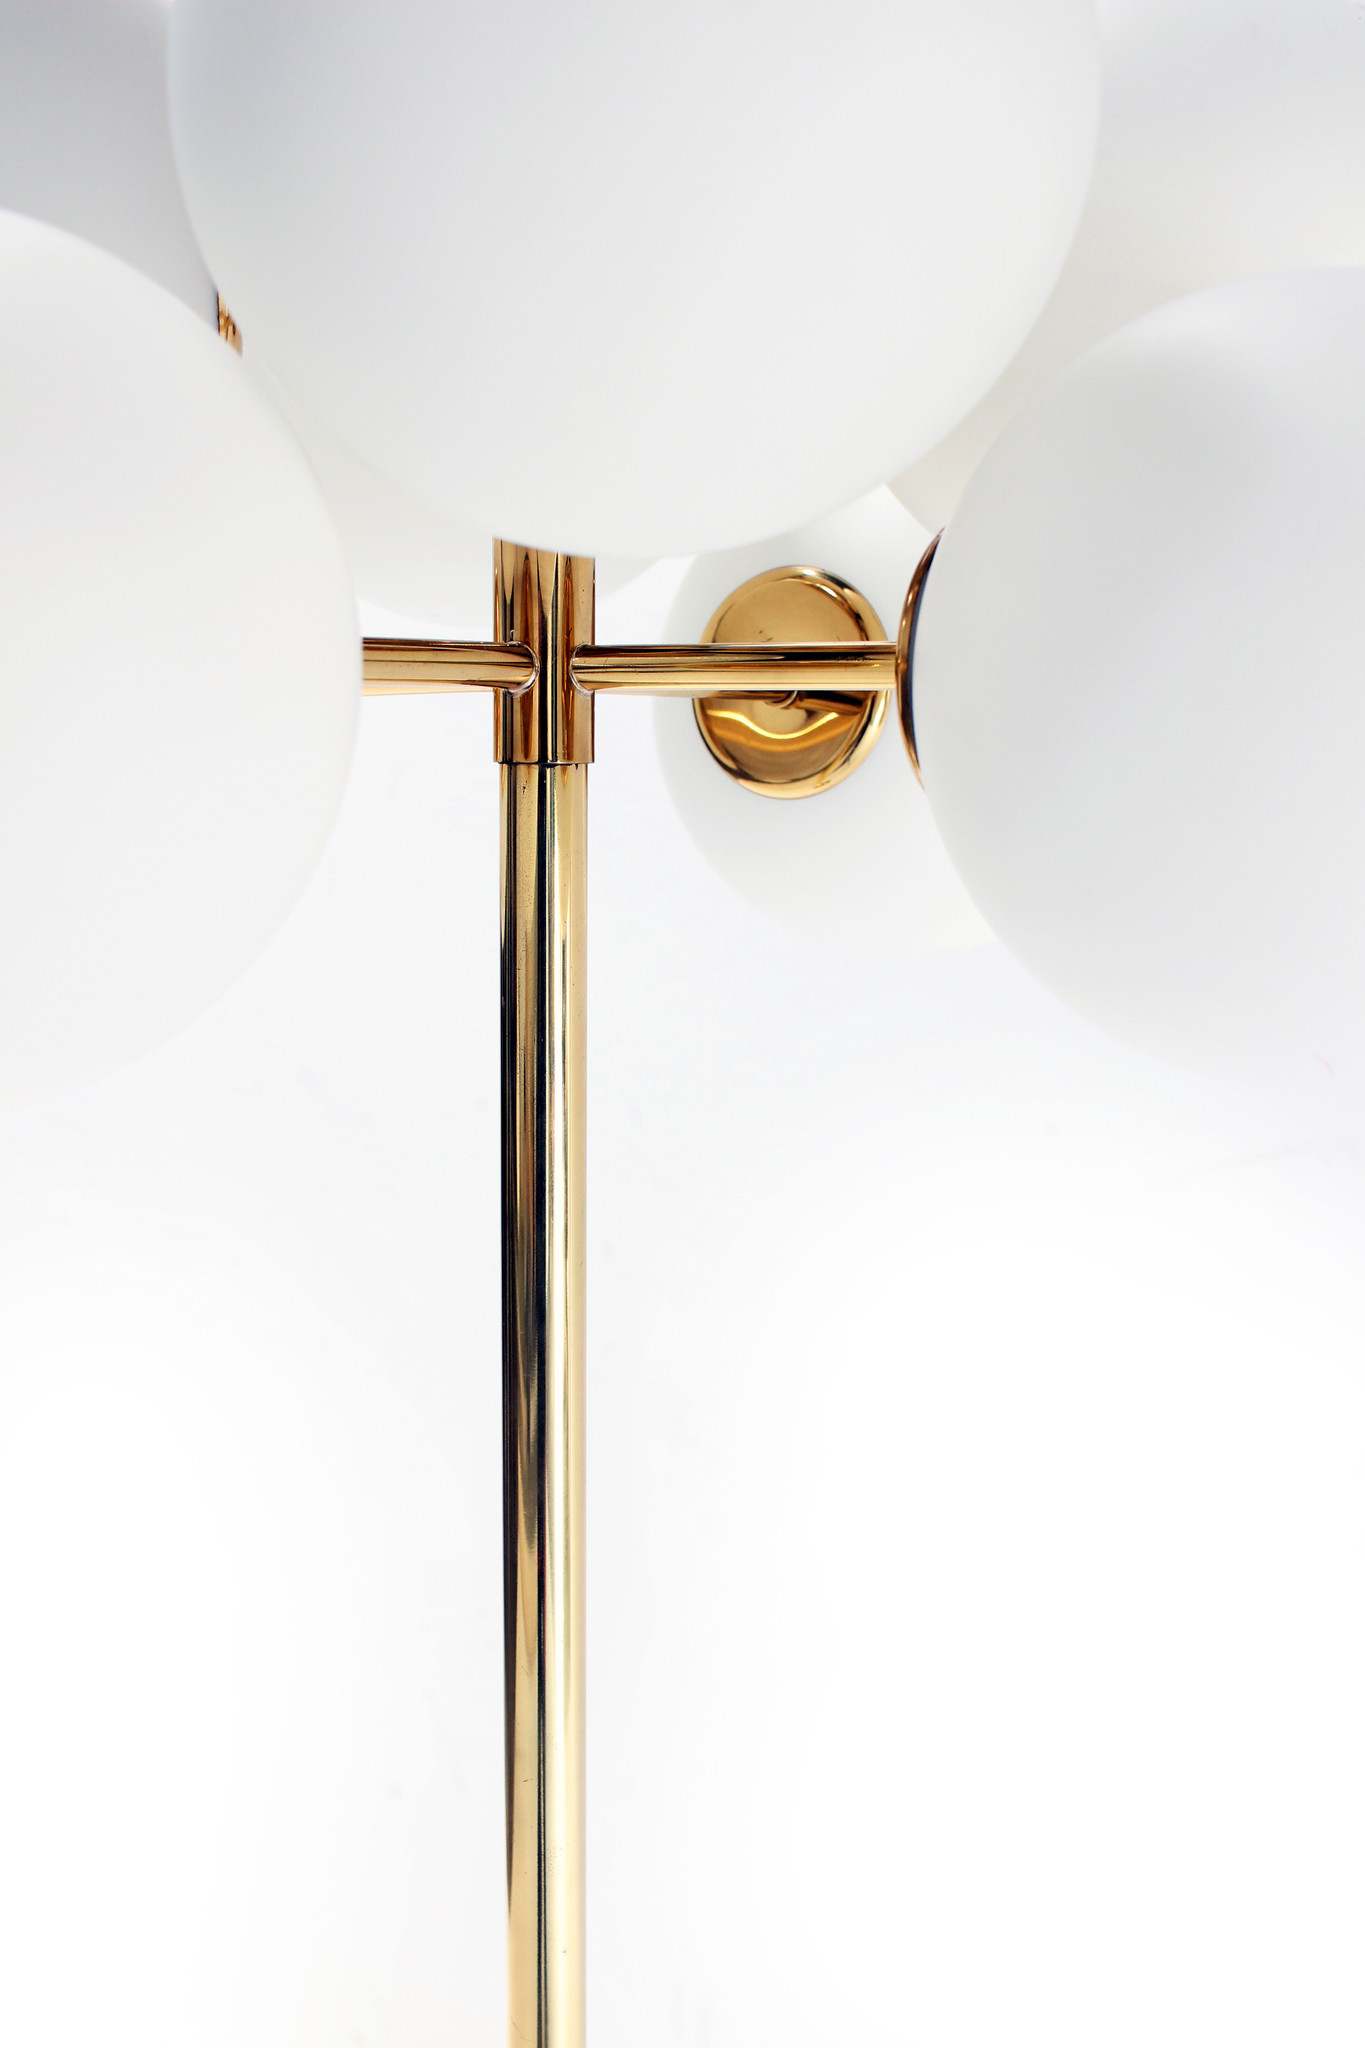 Brass floor lamp by Max Bill For Temde 1960s